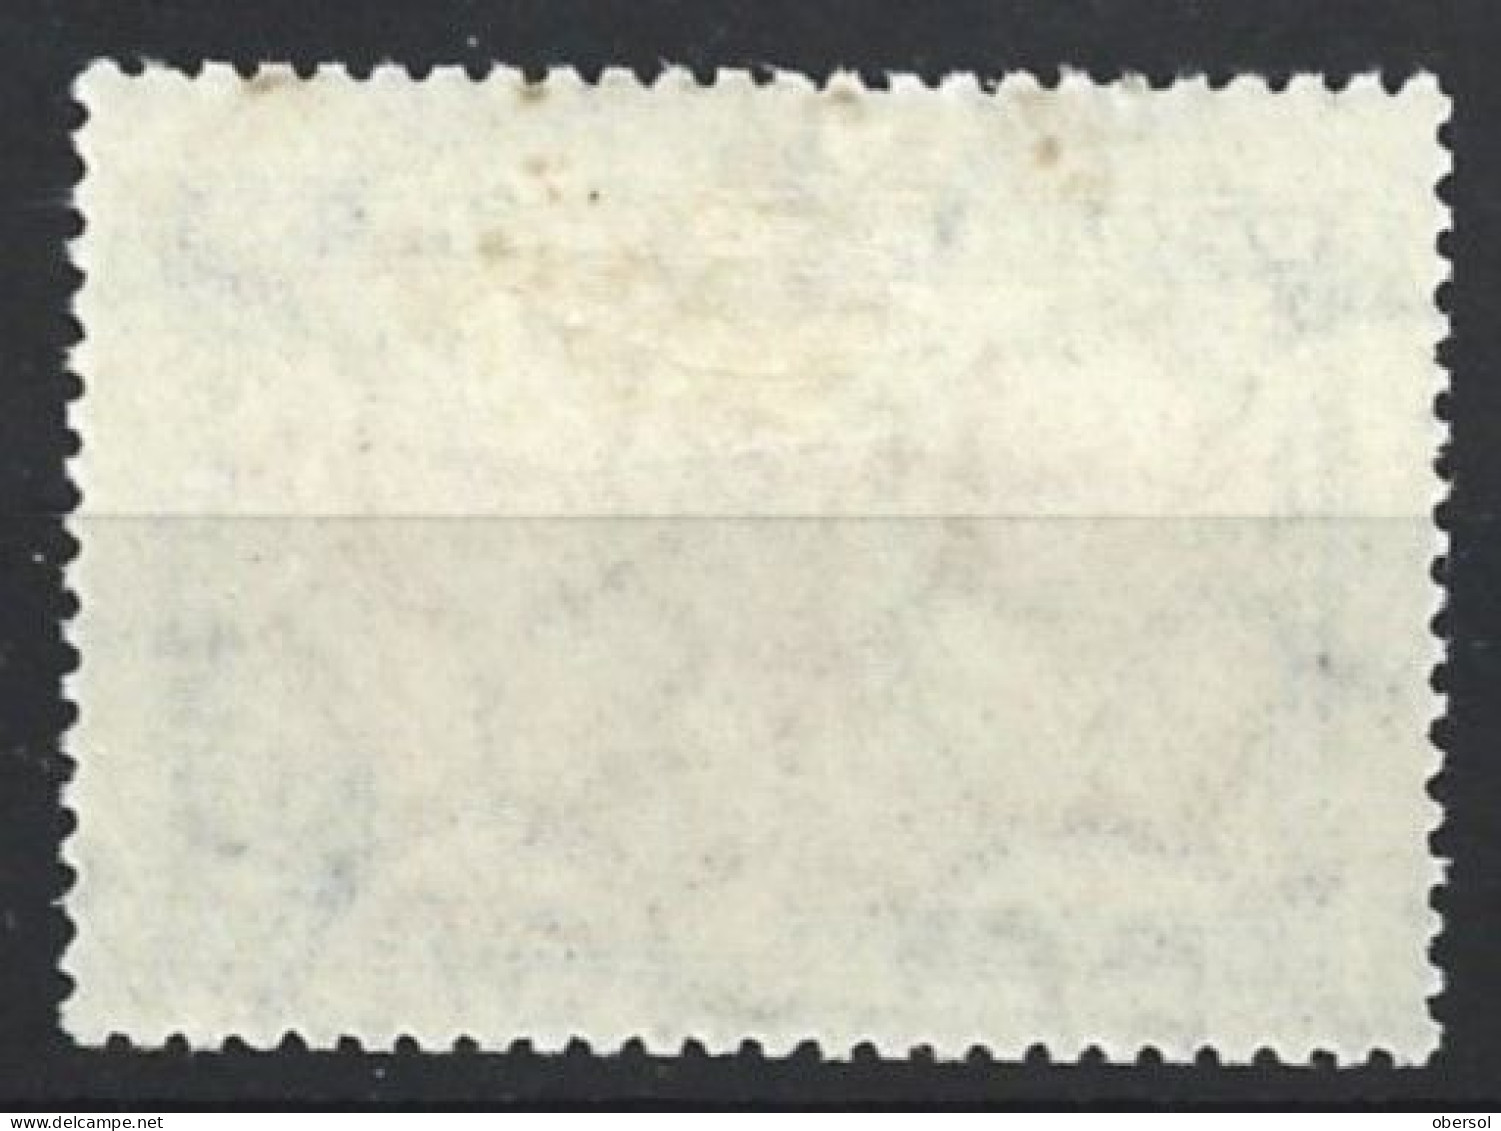 Argentina 1930 Revolution $2 MH Stamp CV:  USD 45 - Nuovi